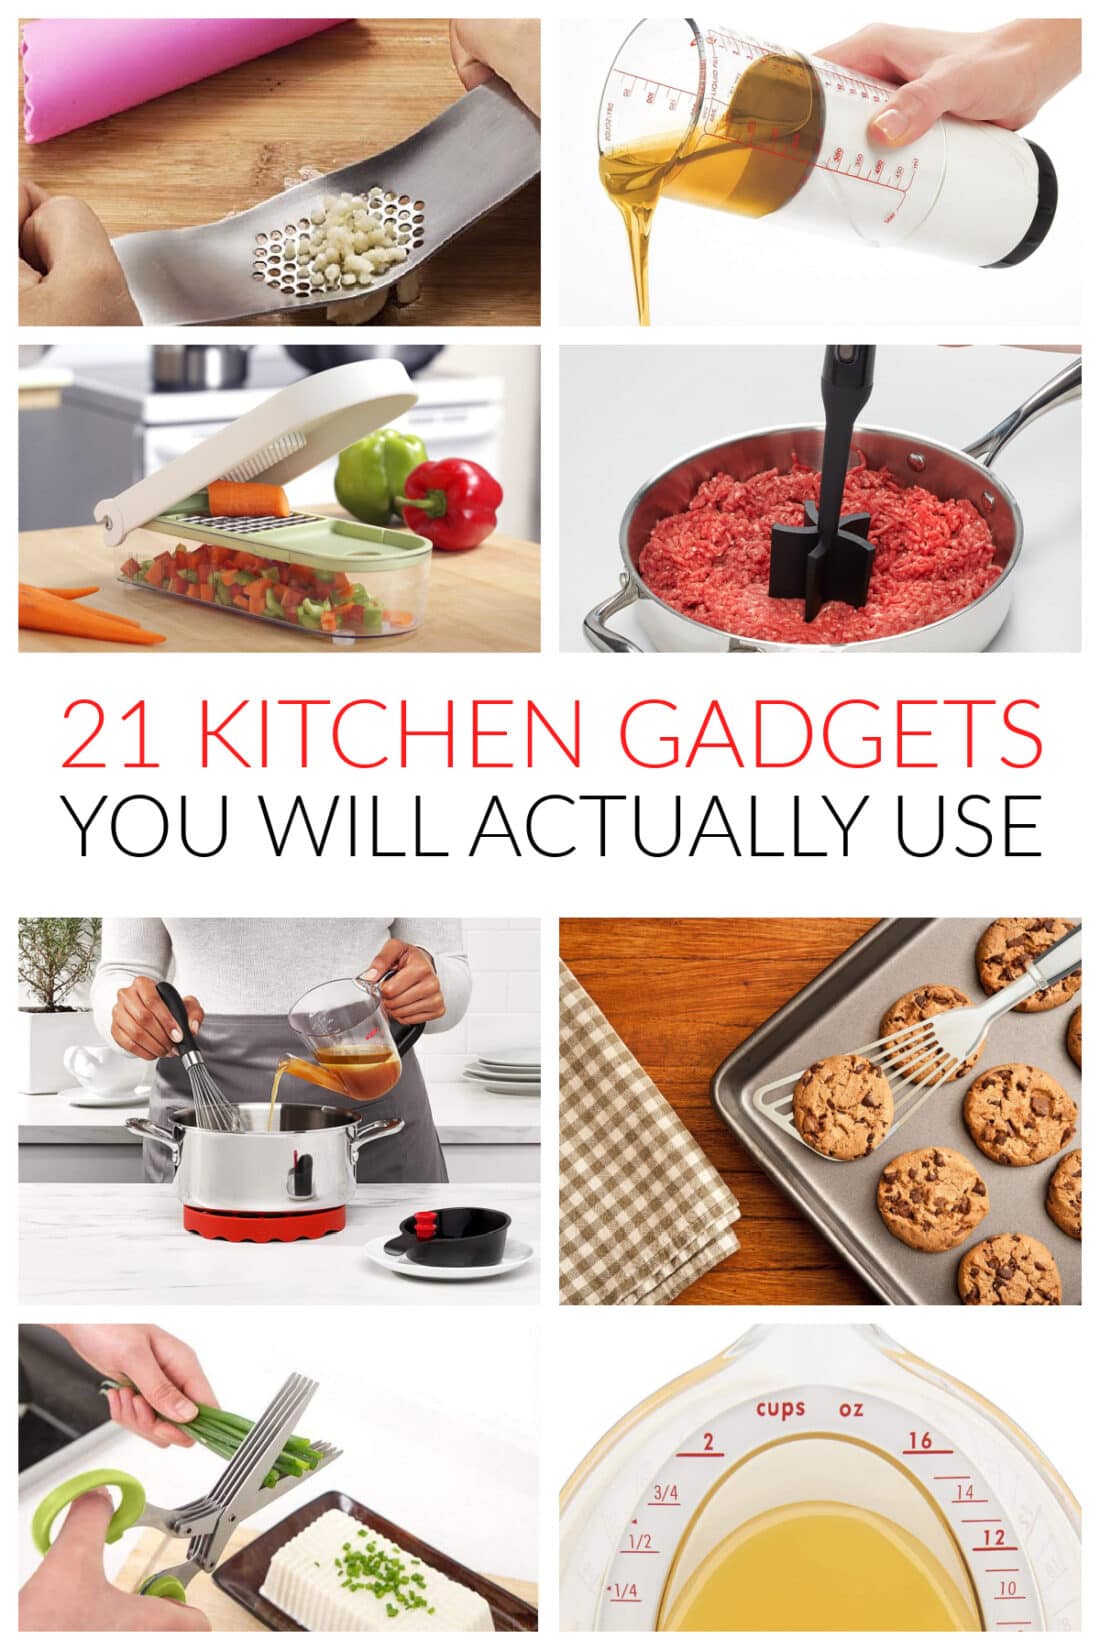 https://amandascookin.com/wp-content/uploads/2020/10/kitchen-gadgets-1100x1650.jpg